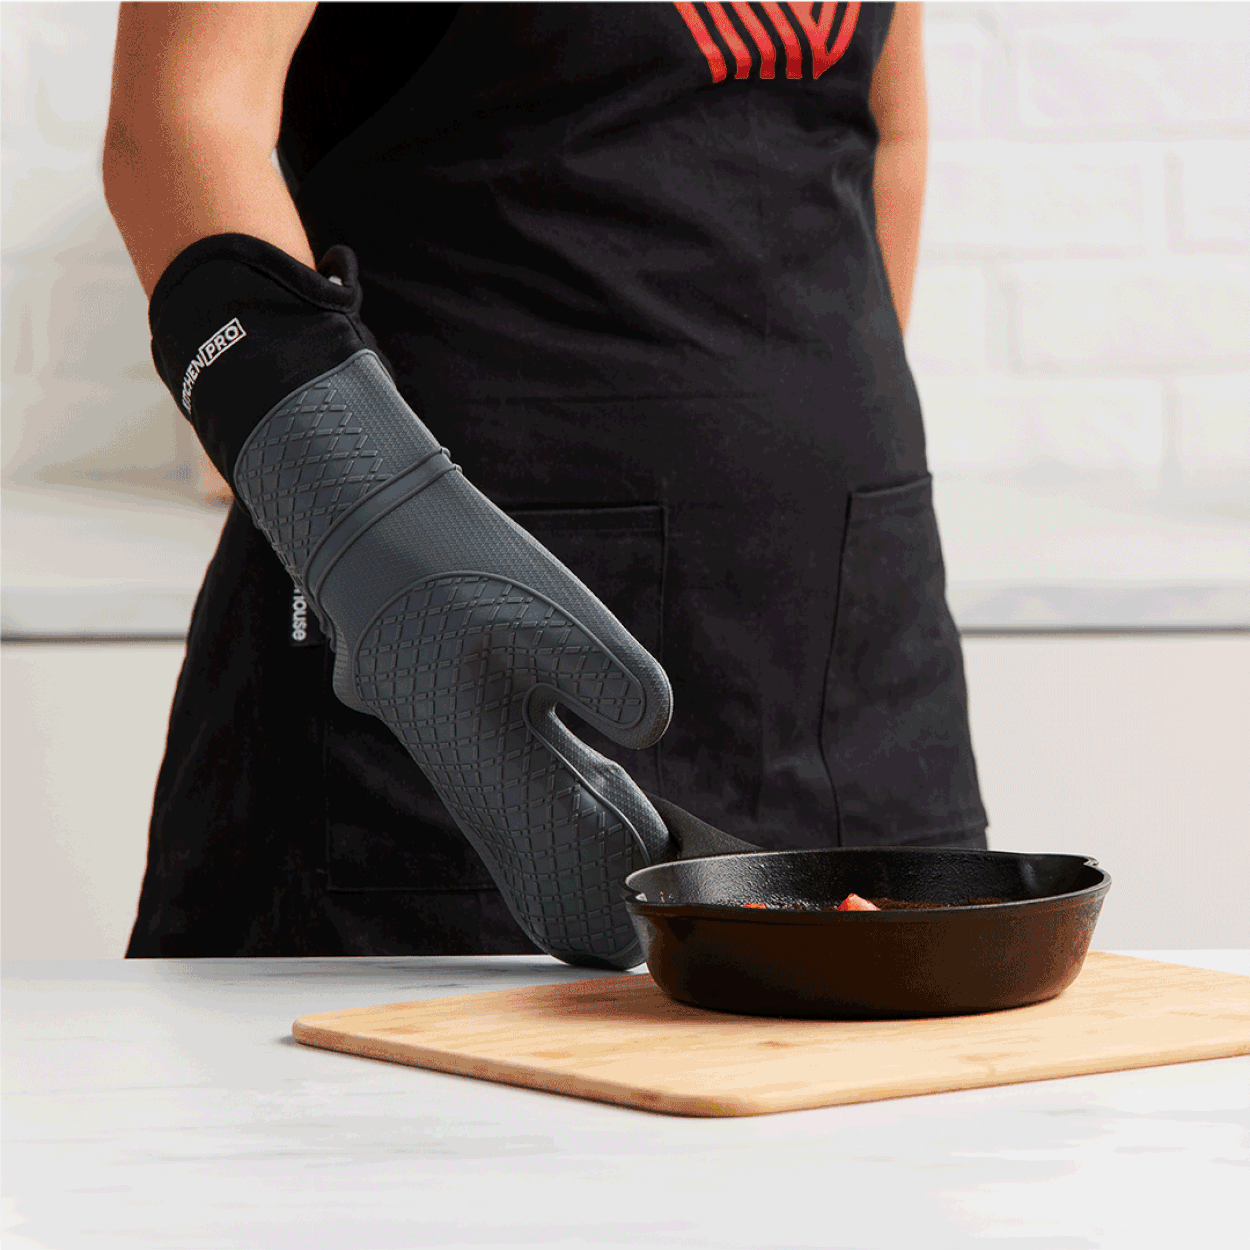 Kitchen Pro Oslo Silicone Oven Glove Grey Image 2